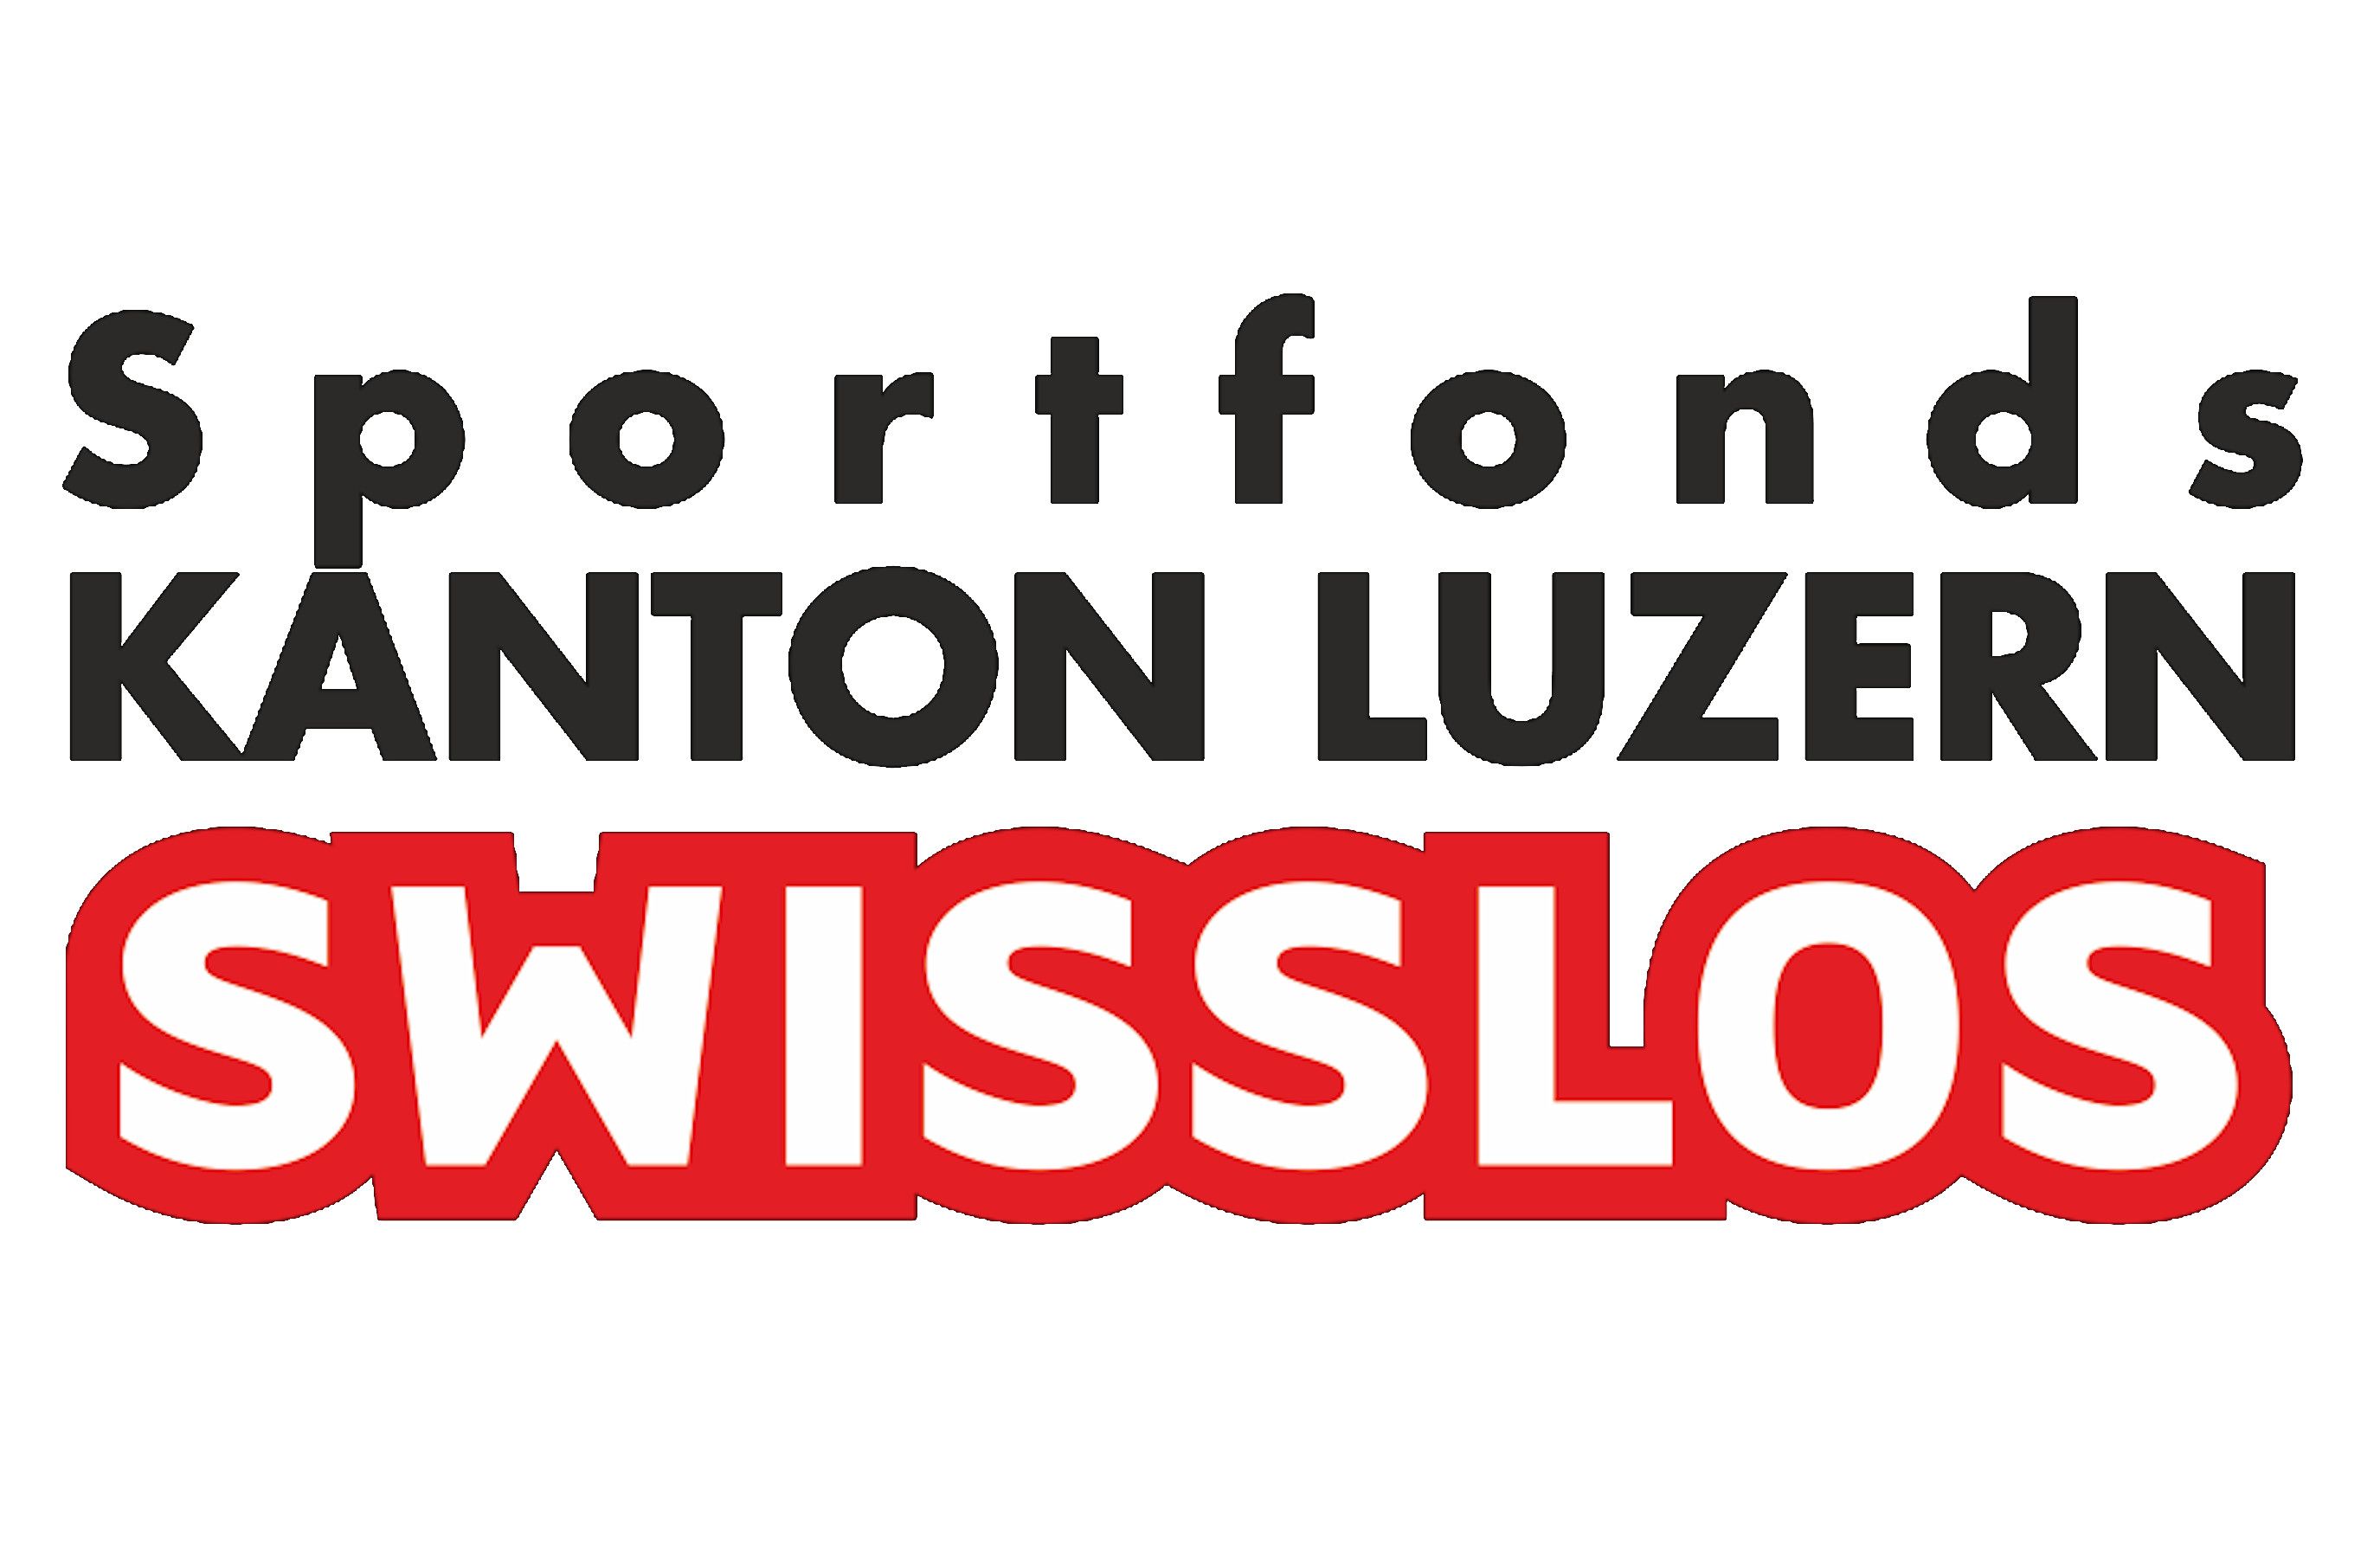 Swisslos Sportfonds Kanton Luzern